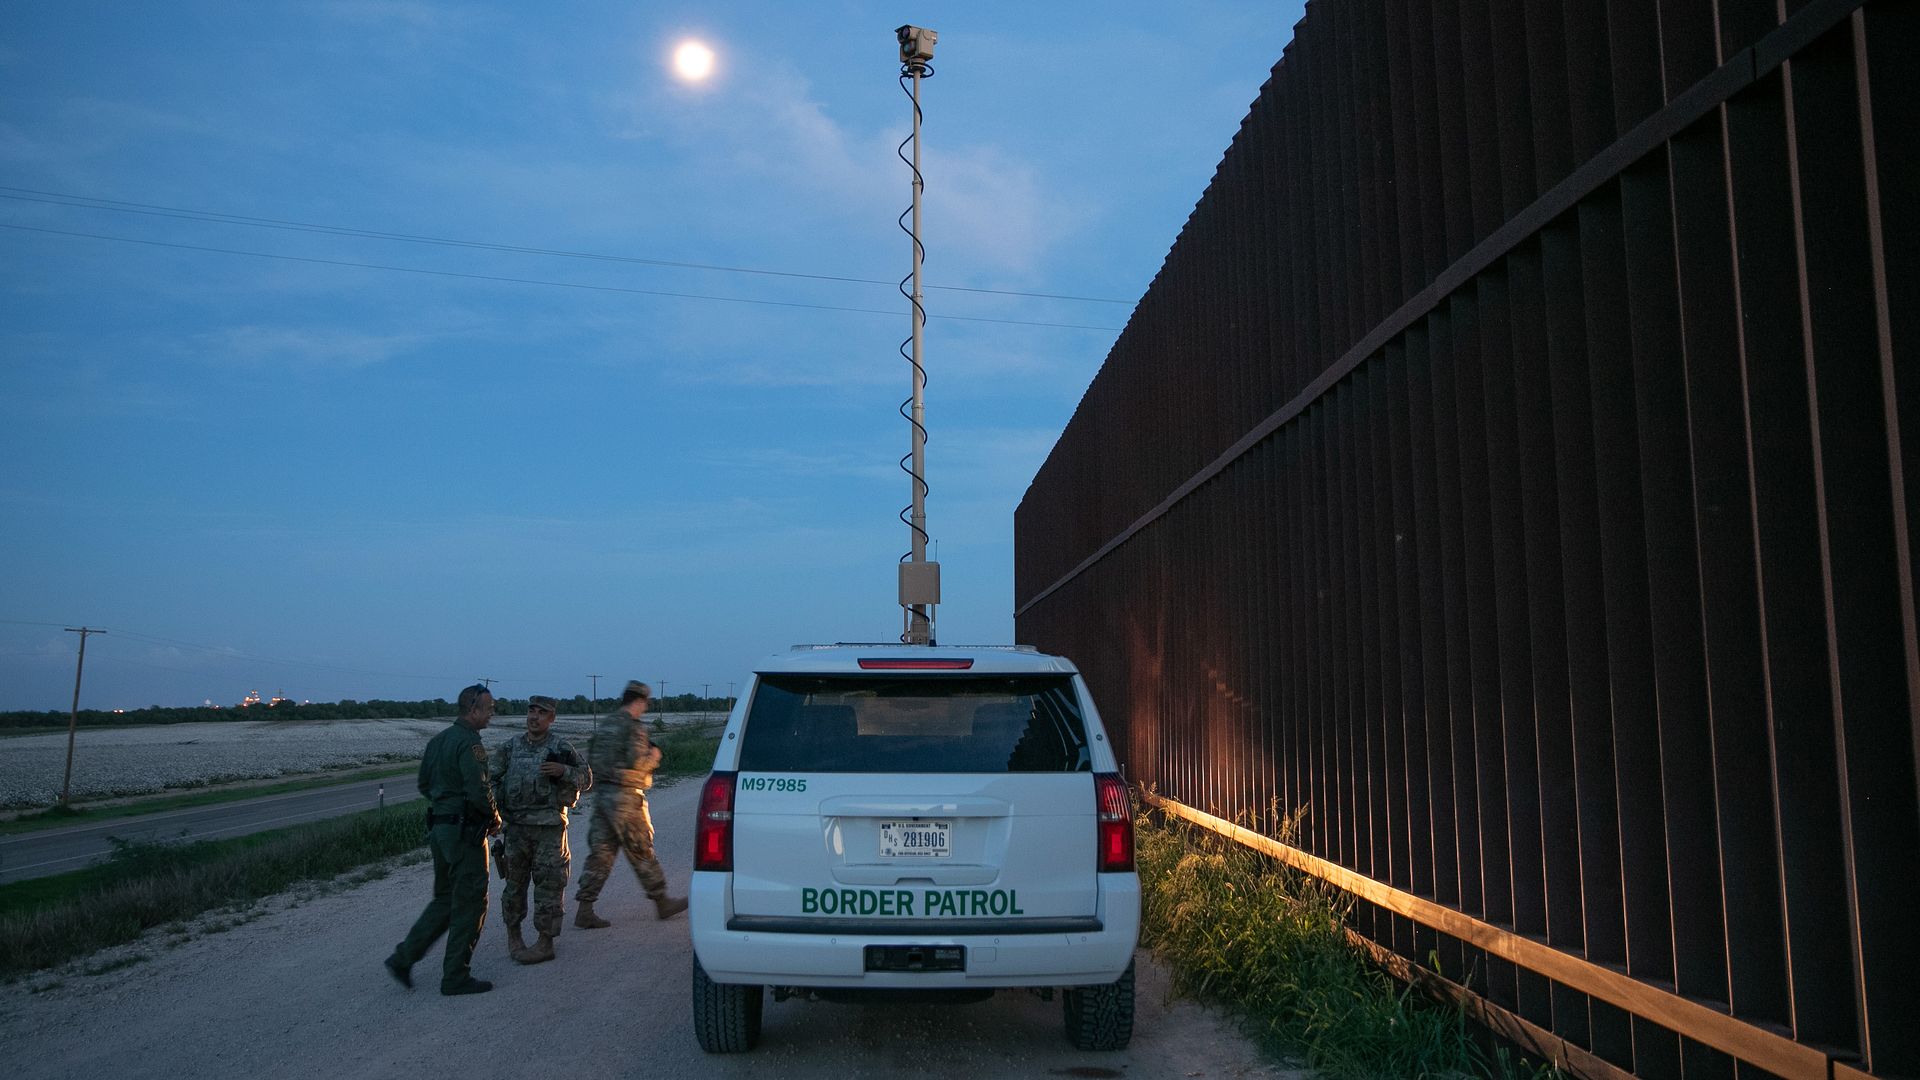 Border patrol car parked by a border fence at dusk. 